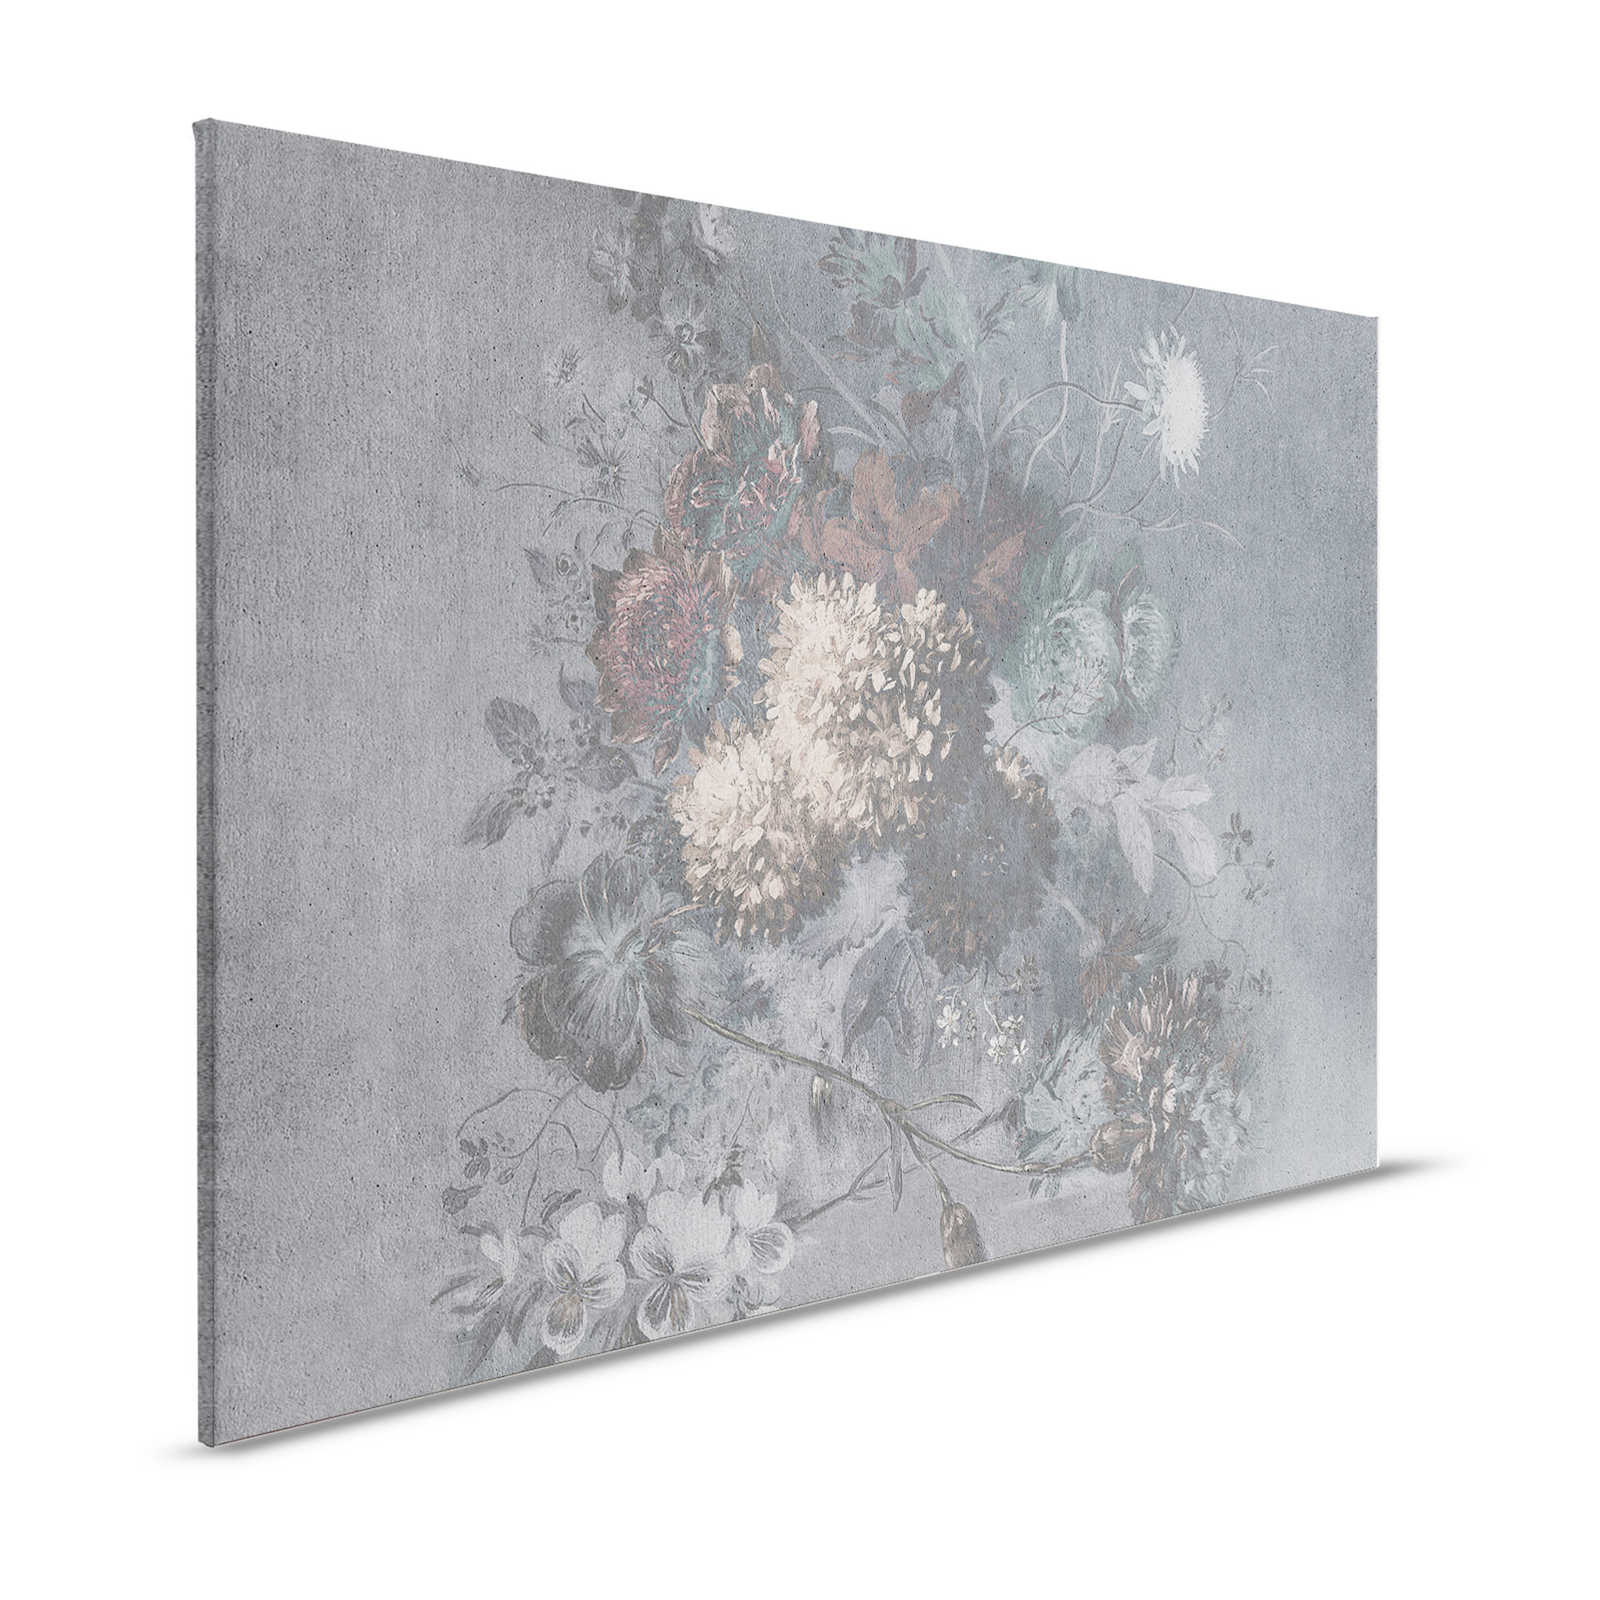 Cuadro en lienzo Ramo de flores estilo vintage | blanco, gris - 1,20 m x 0,80 m
